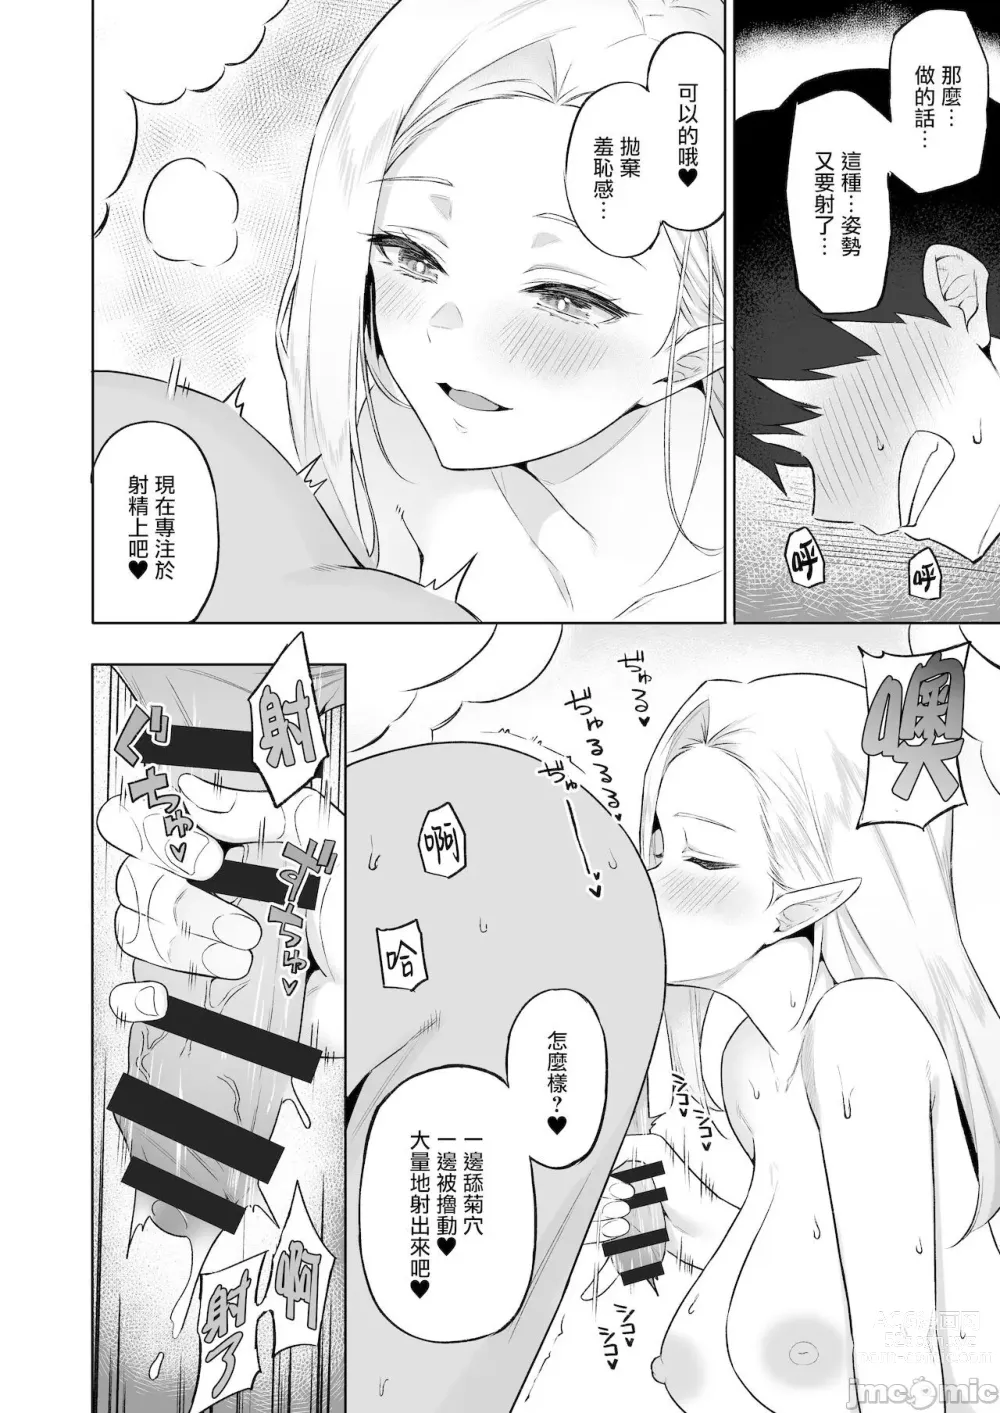 Page 14 of doujinshi 524